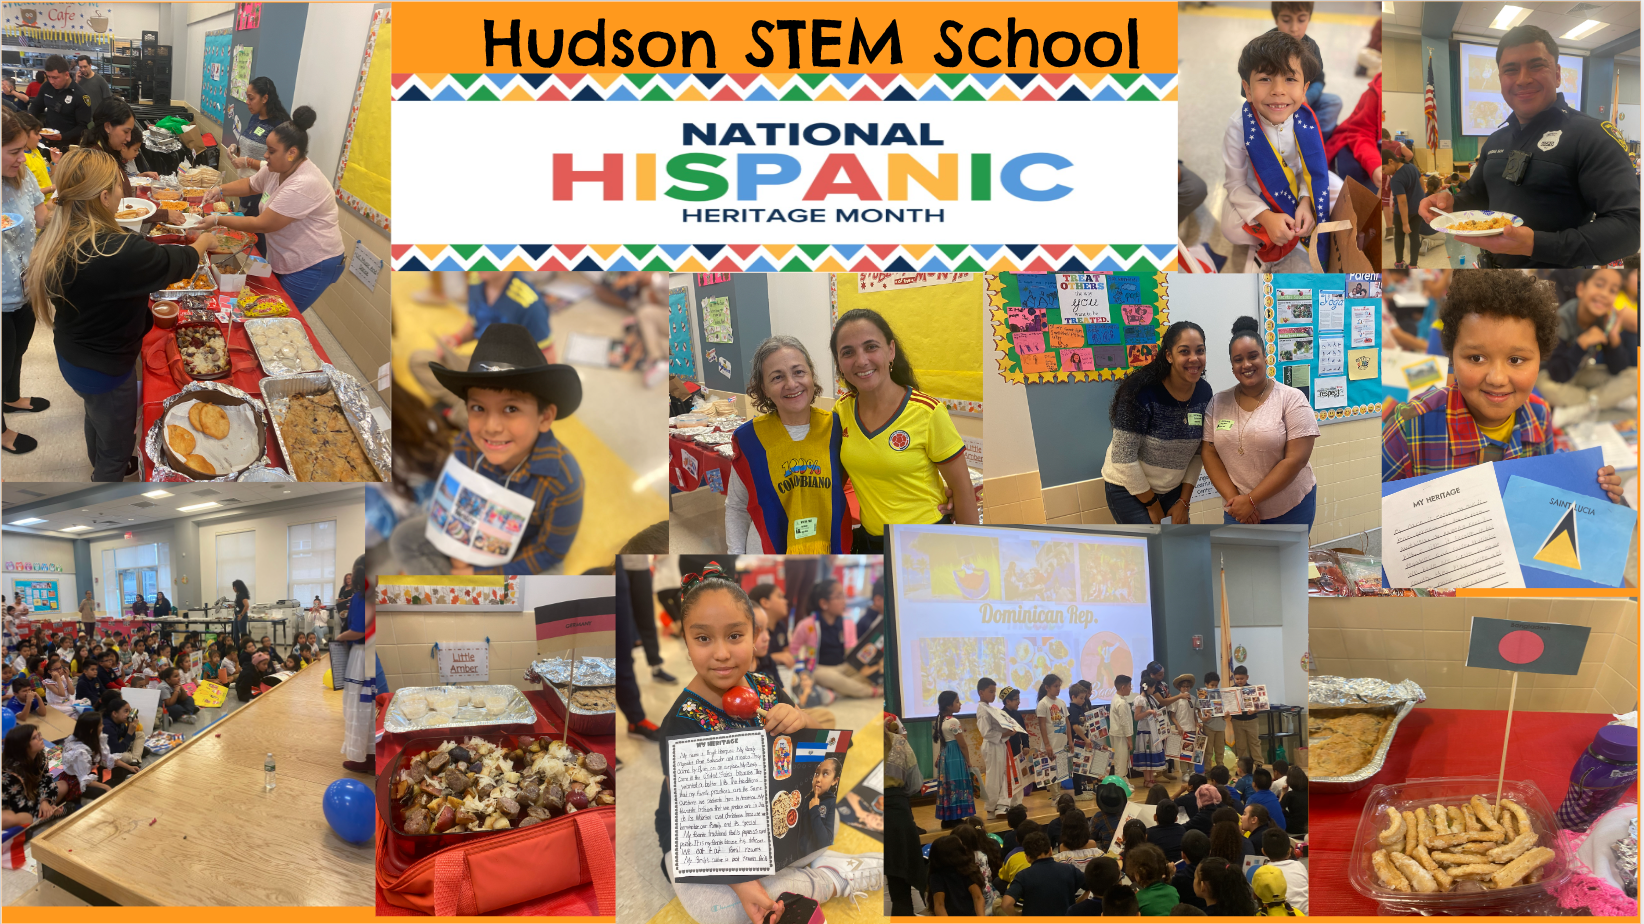 The Hudson STEM School celebrating Hispanic Heritage Month